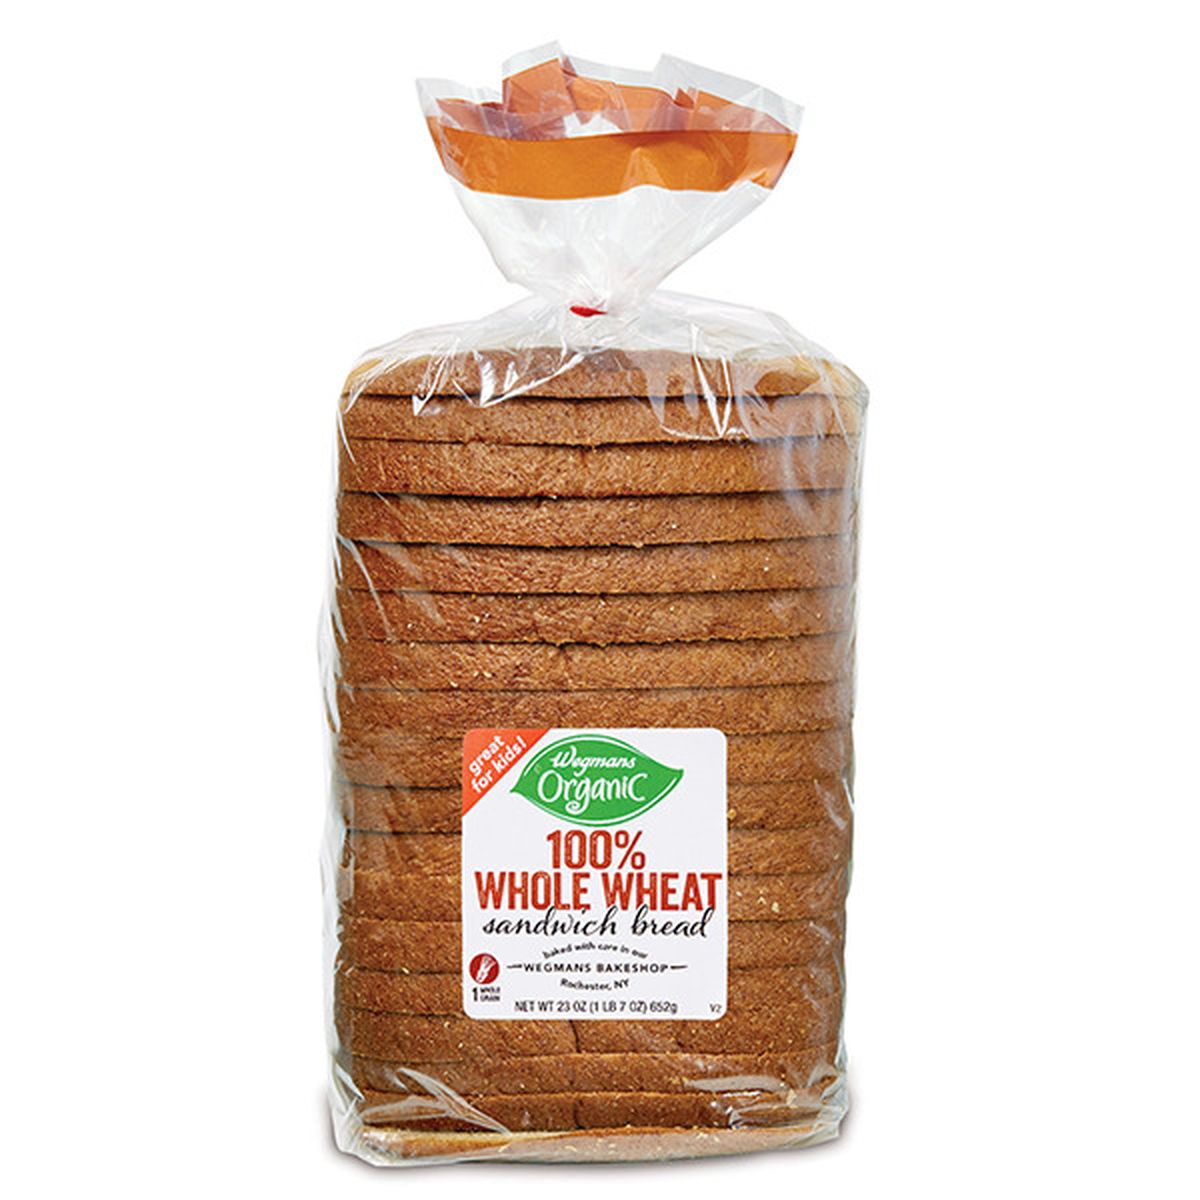 Calories in Wegmans Organic 100% Whole Wheat Sandwich Bread